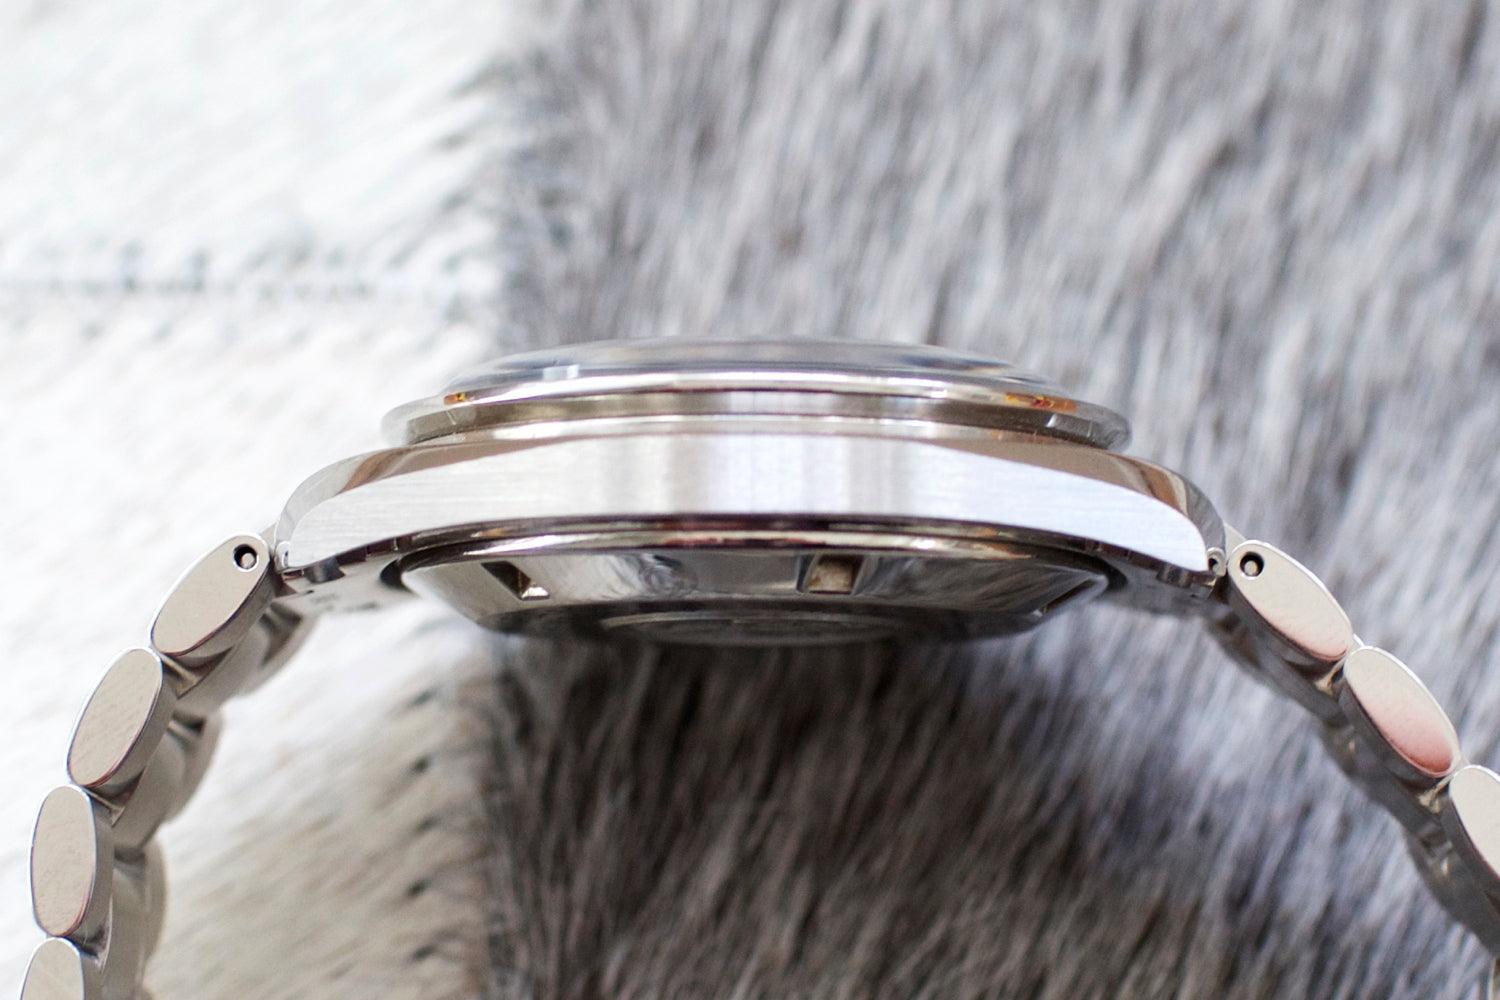 SOLDOUT: Omega Speedmaster Moon Watch 3570.50.00 Chronograph Steel Mens - WearingTime Luxury Watches